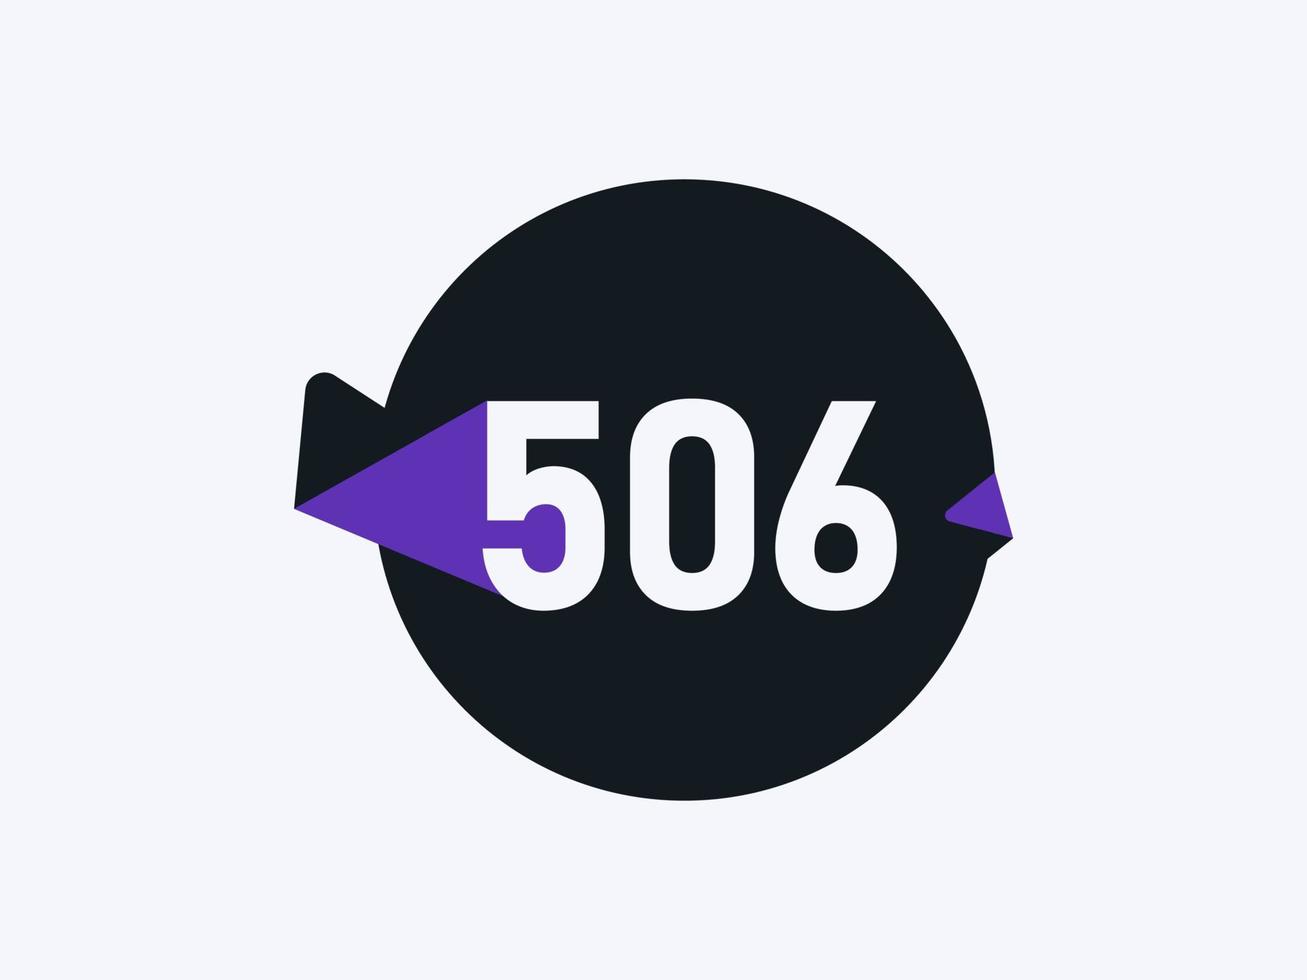 506 Number logo icon design vector image. Number logo icon design vector image